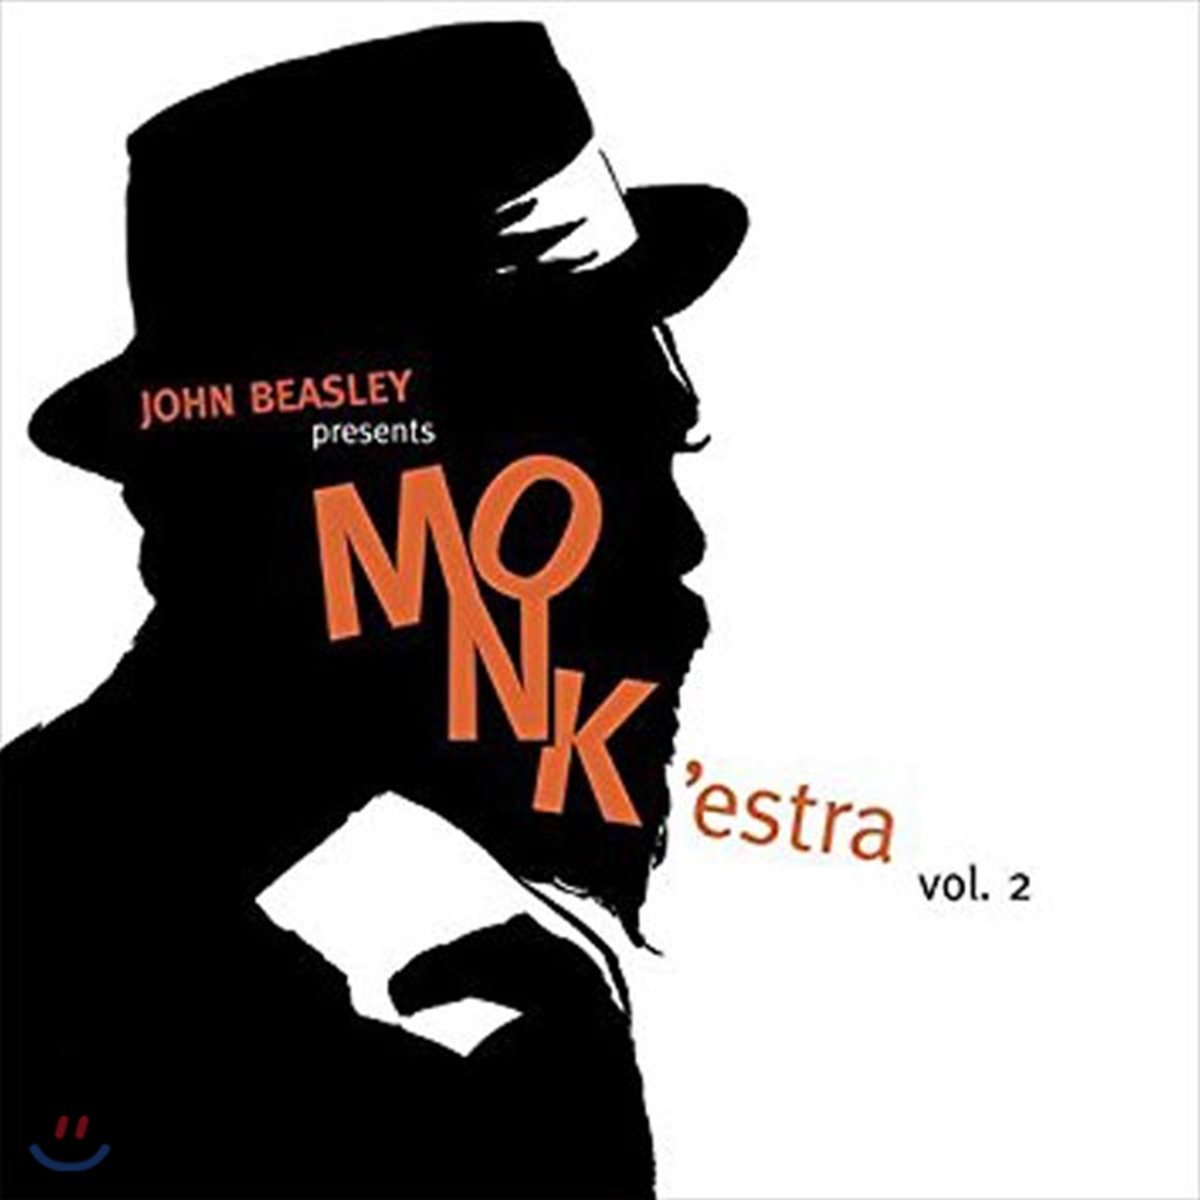 John Beasley (존 비즐리) - Presents MONK&#39;estra vol. 2